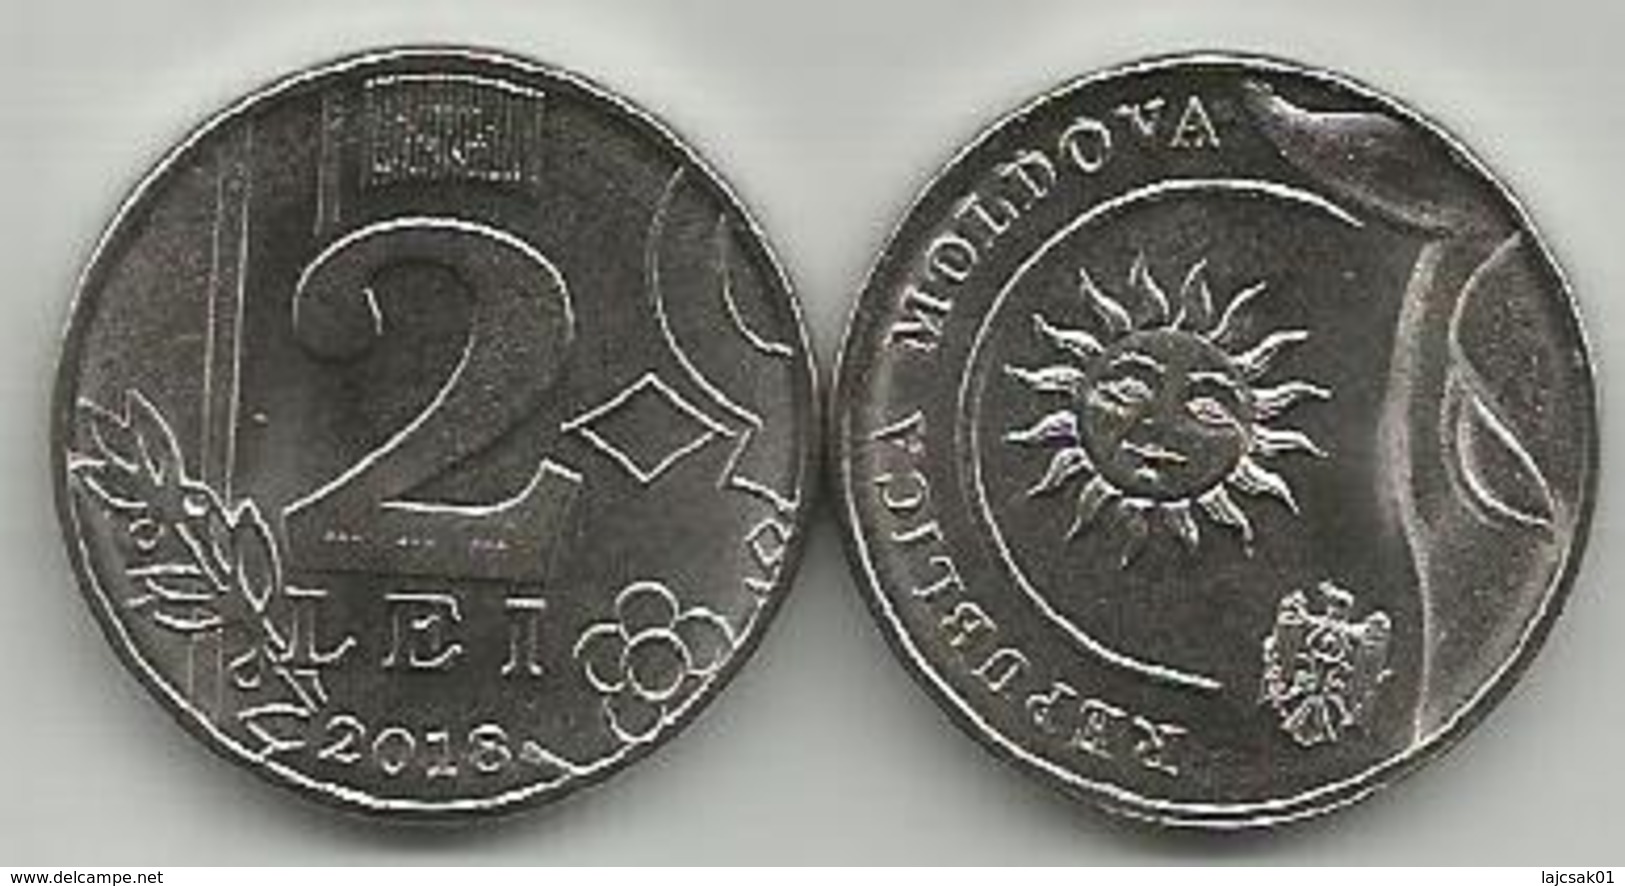 Moldova 2 Lei  2018. UNC - Moldavia